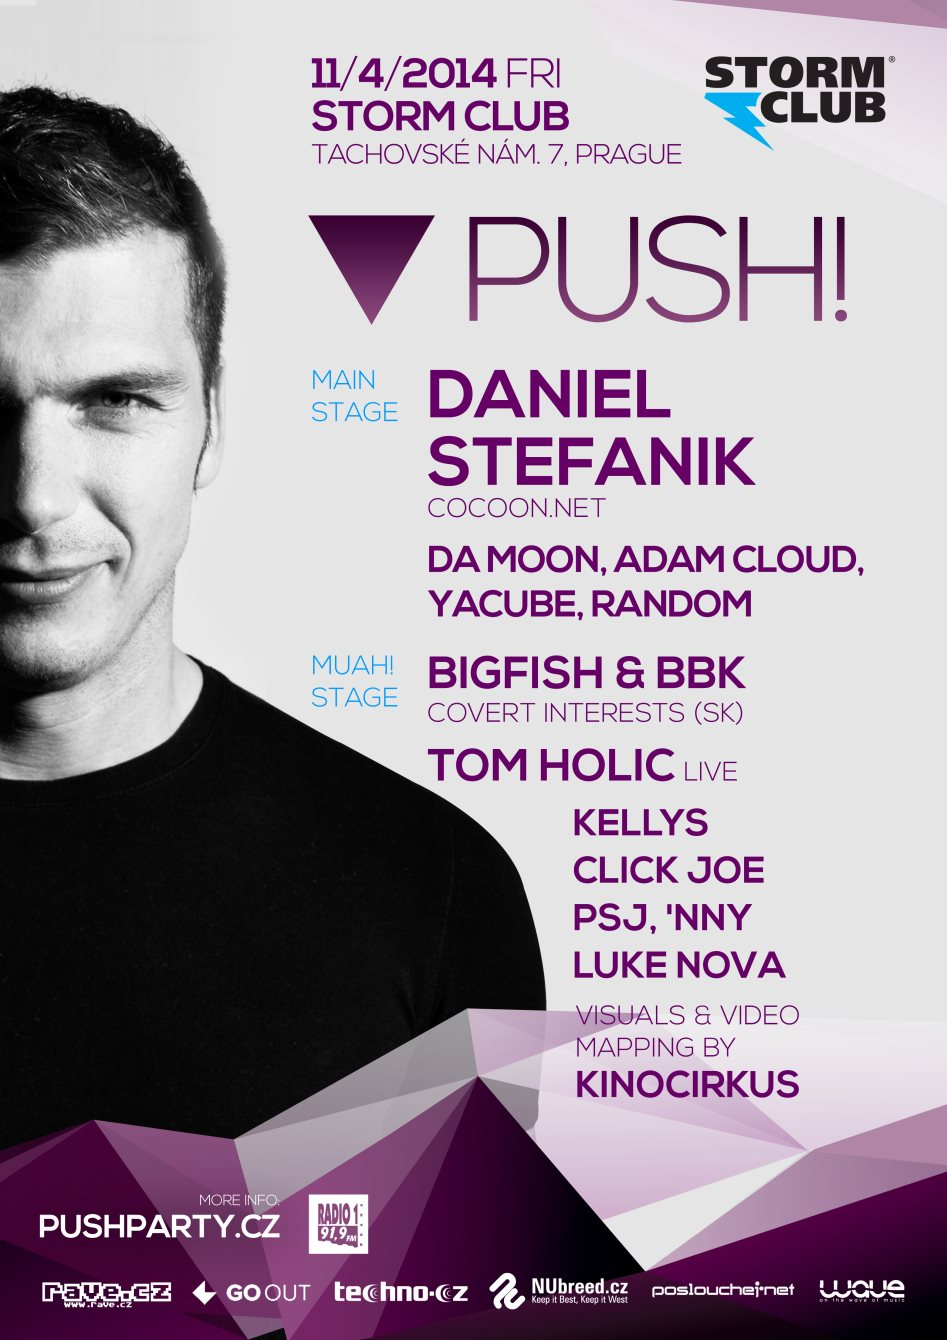 Push! w Daniel Stefanik - Flyer front